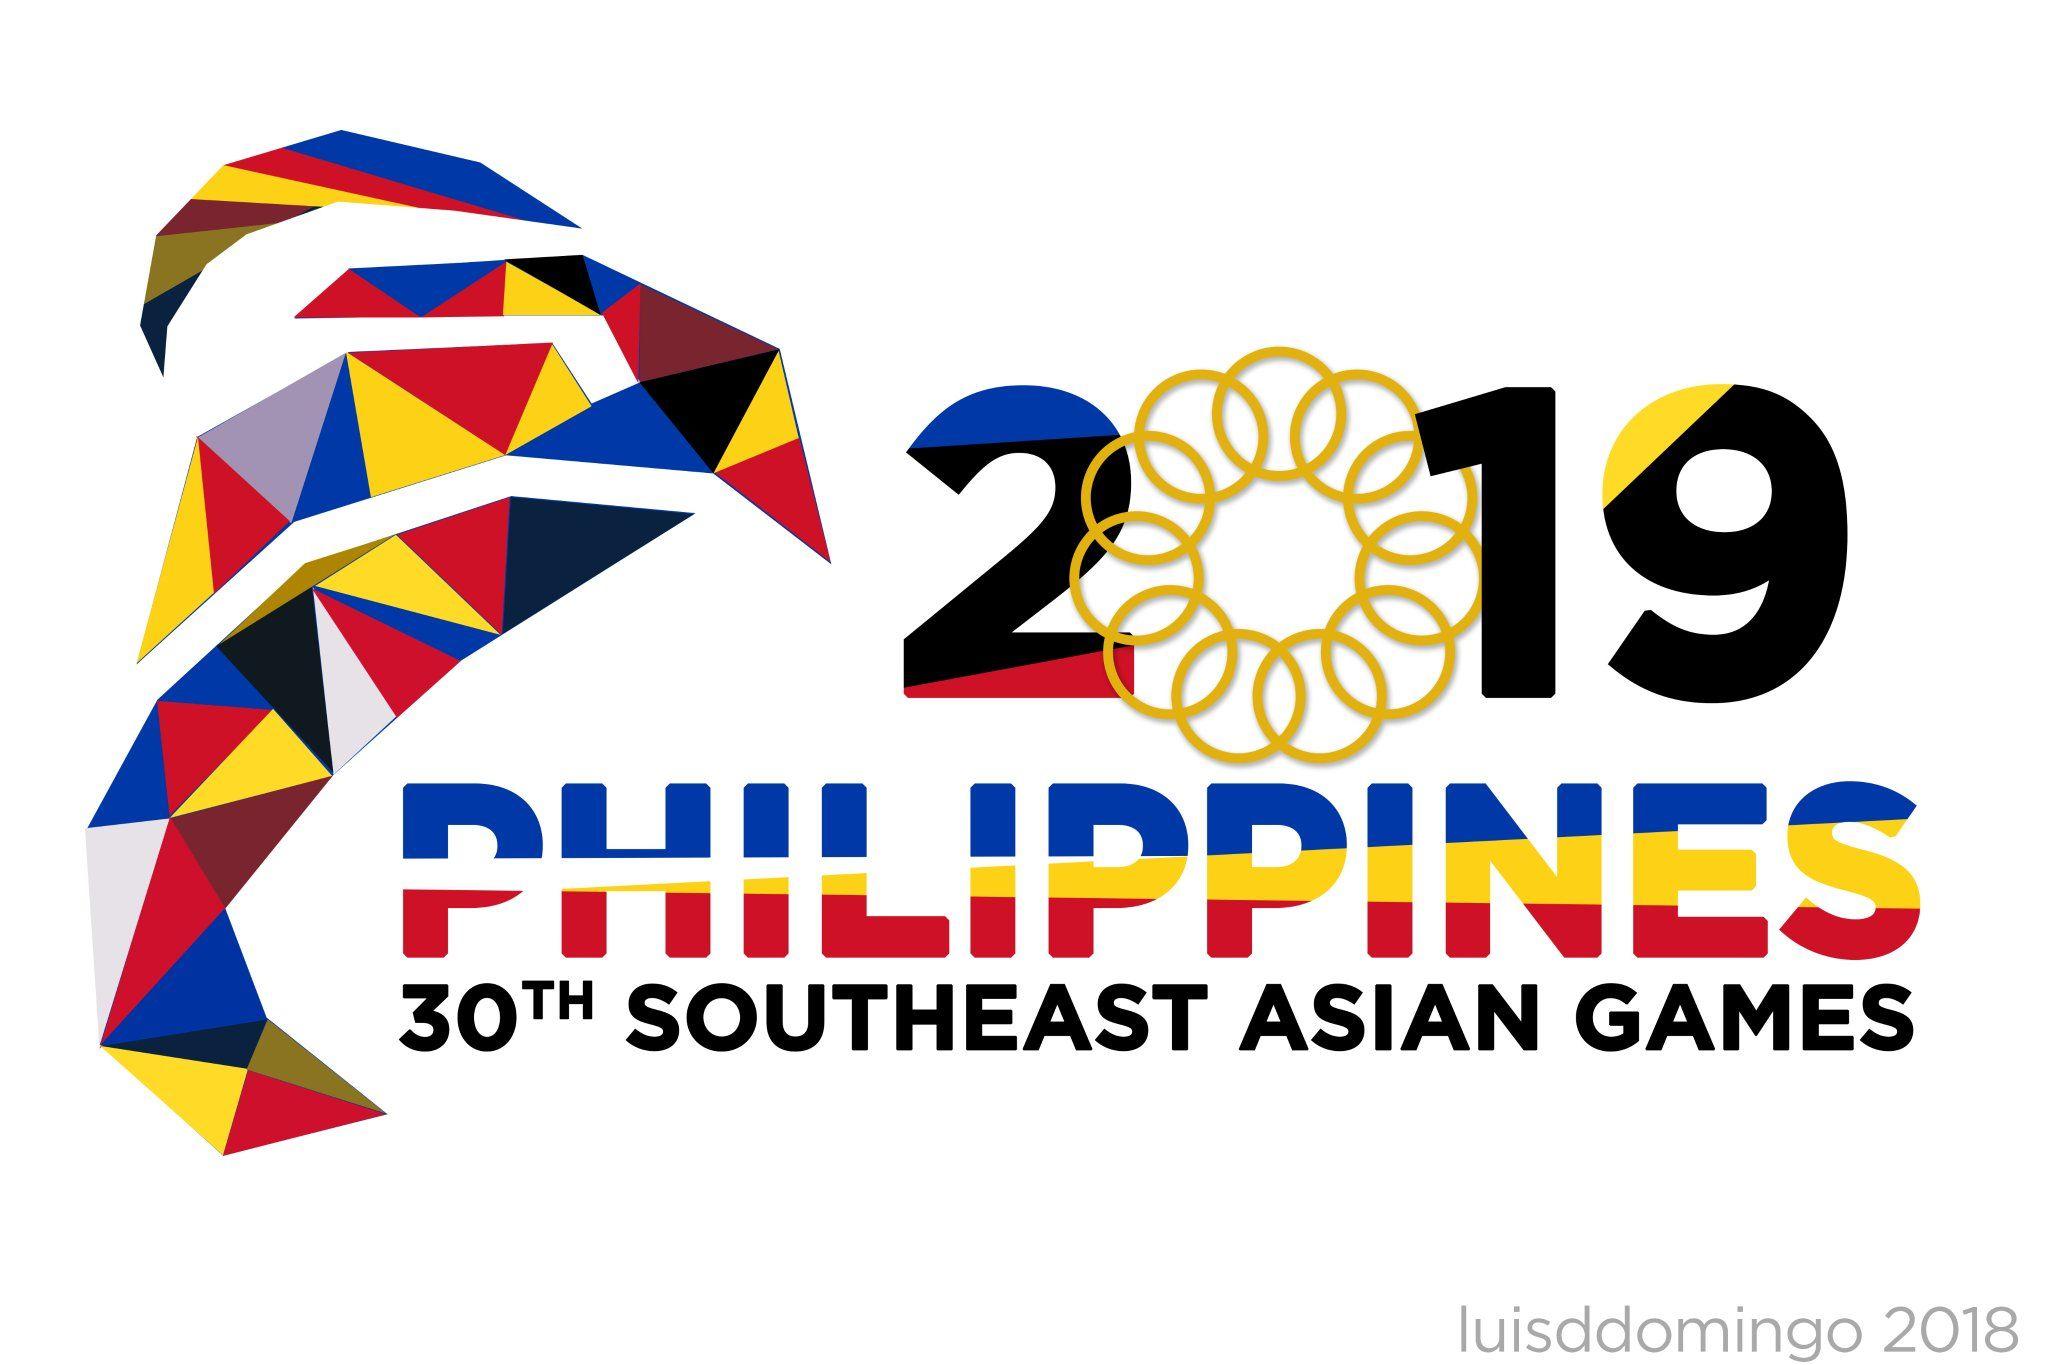 2019 Logo - Philippine eagle shines as netizens redesign 2019 SEA Games logo